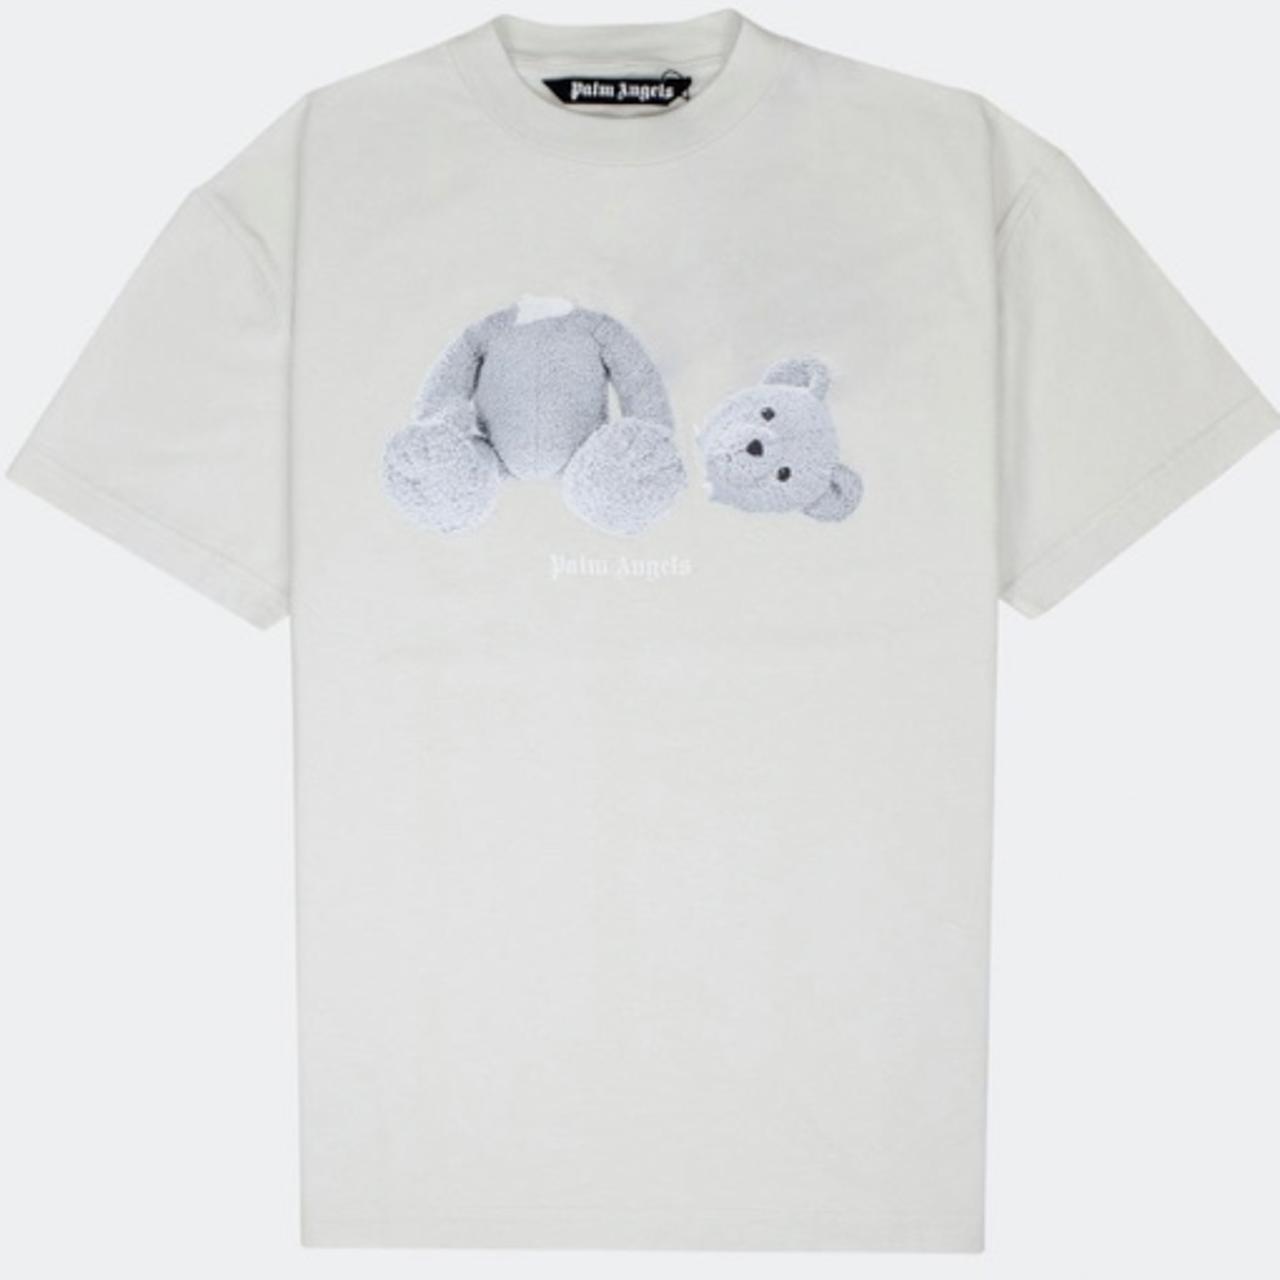 Palm angels off white kill the bear T-shirt size - Depop